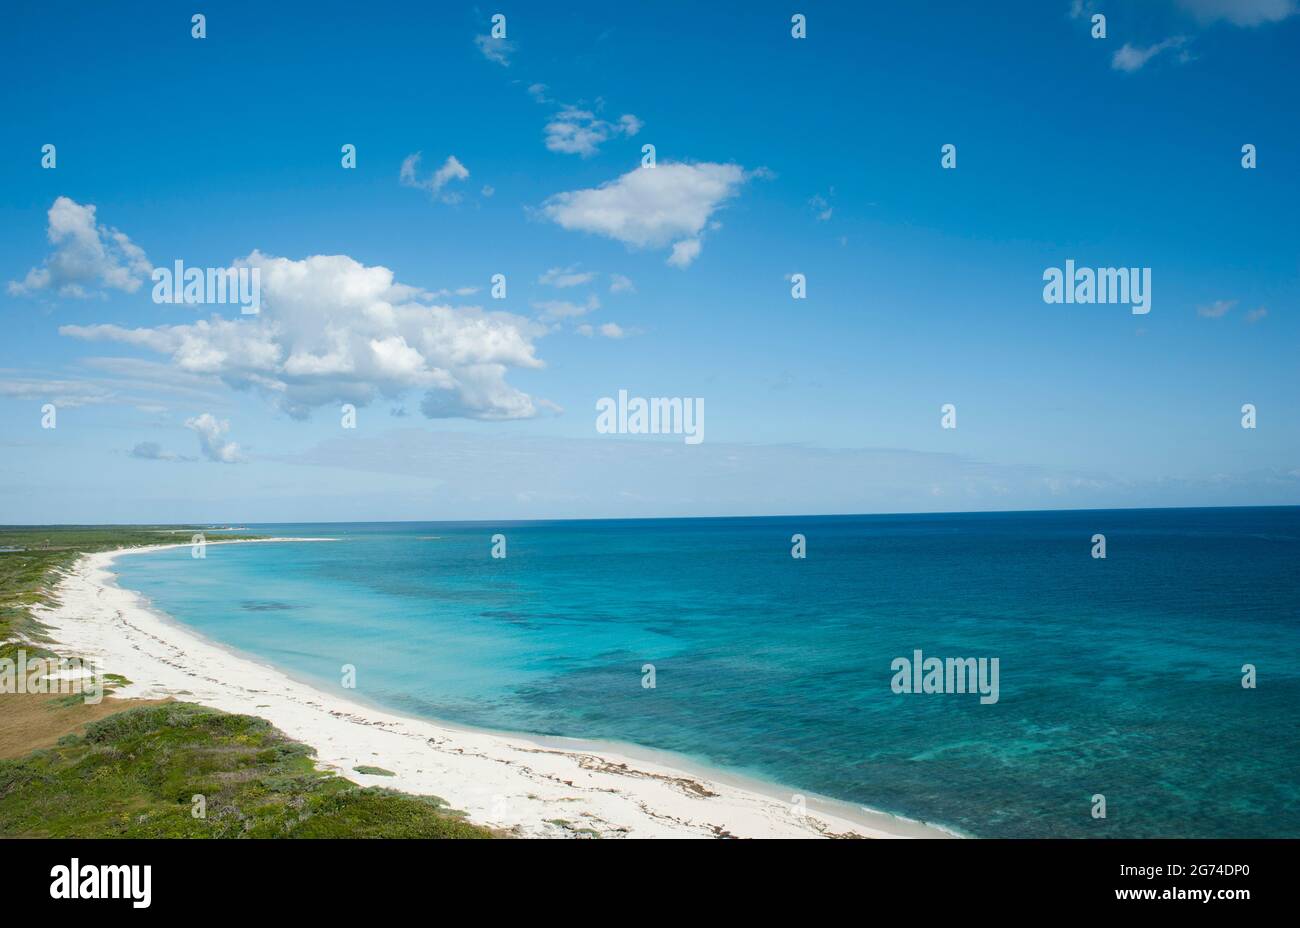 Punta Sur, Cozumel, Quintana Roo, Mexico Stock Photo